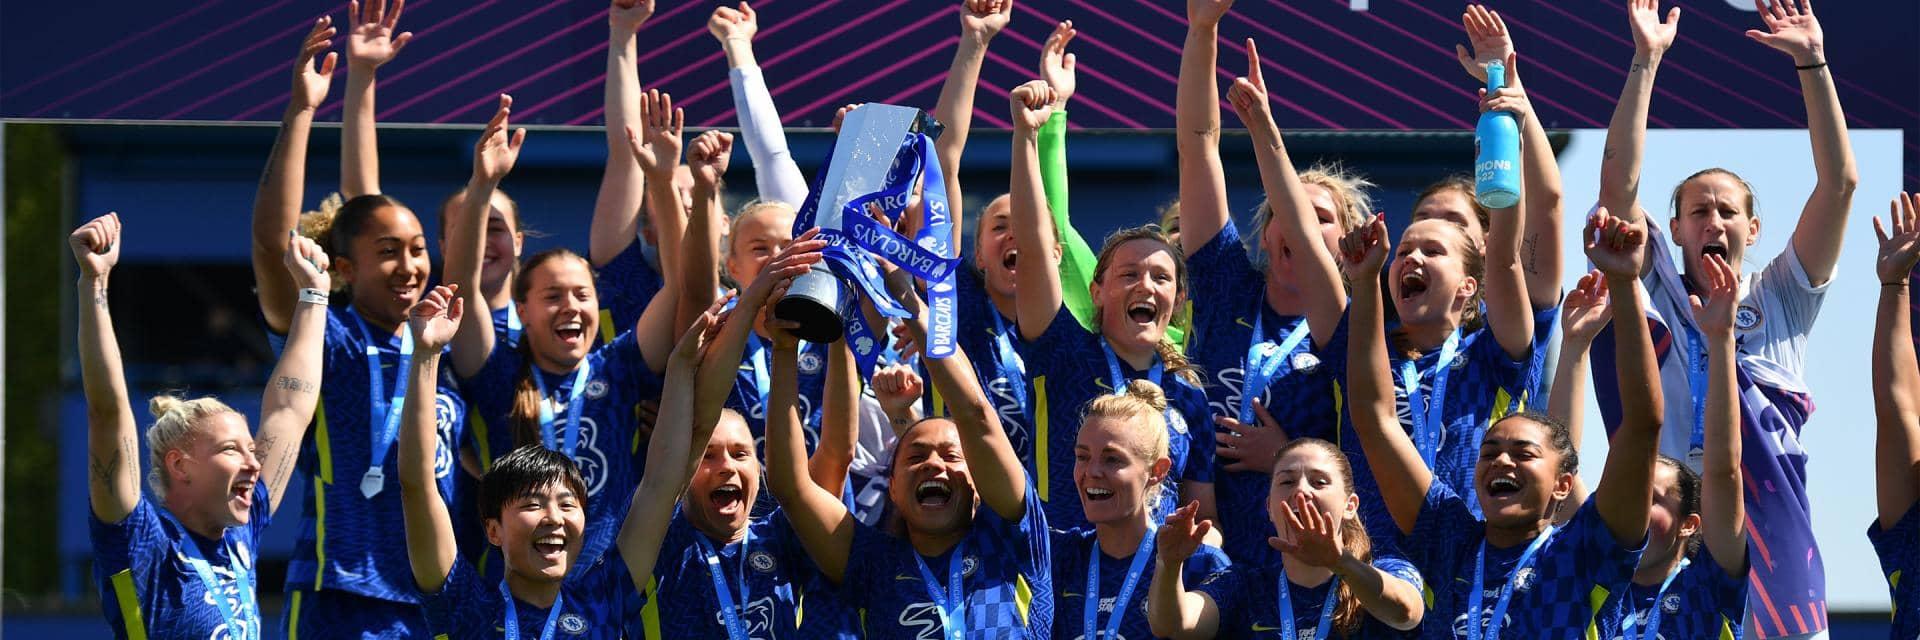 WSL Chelsea team holding trophy